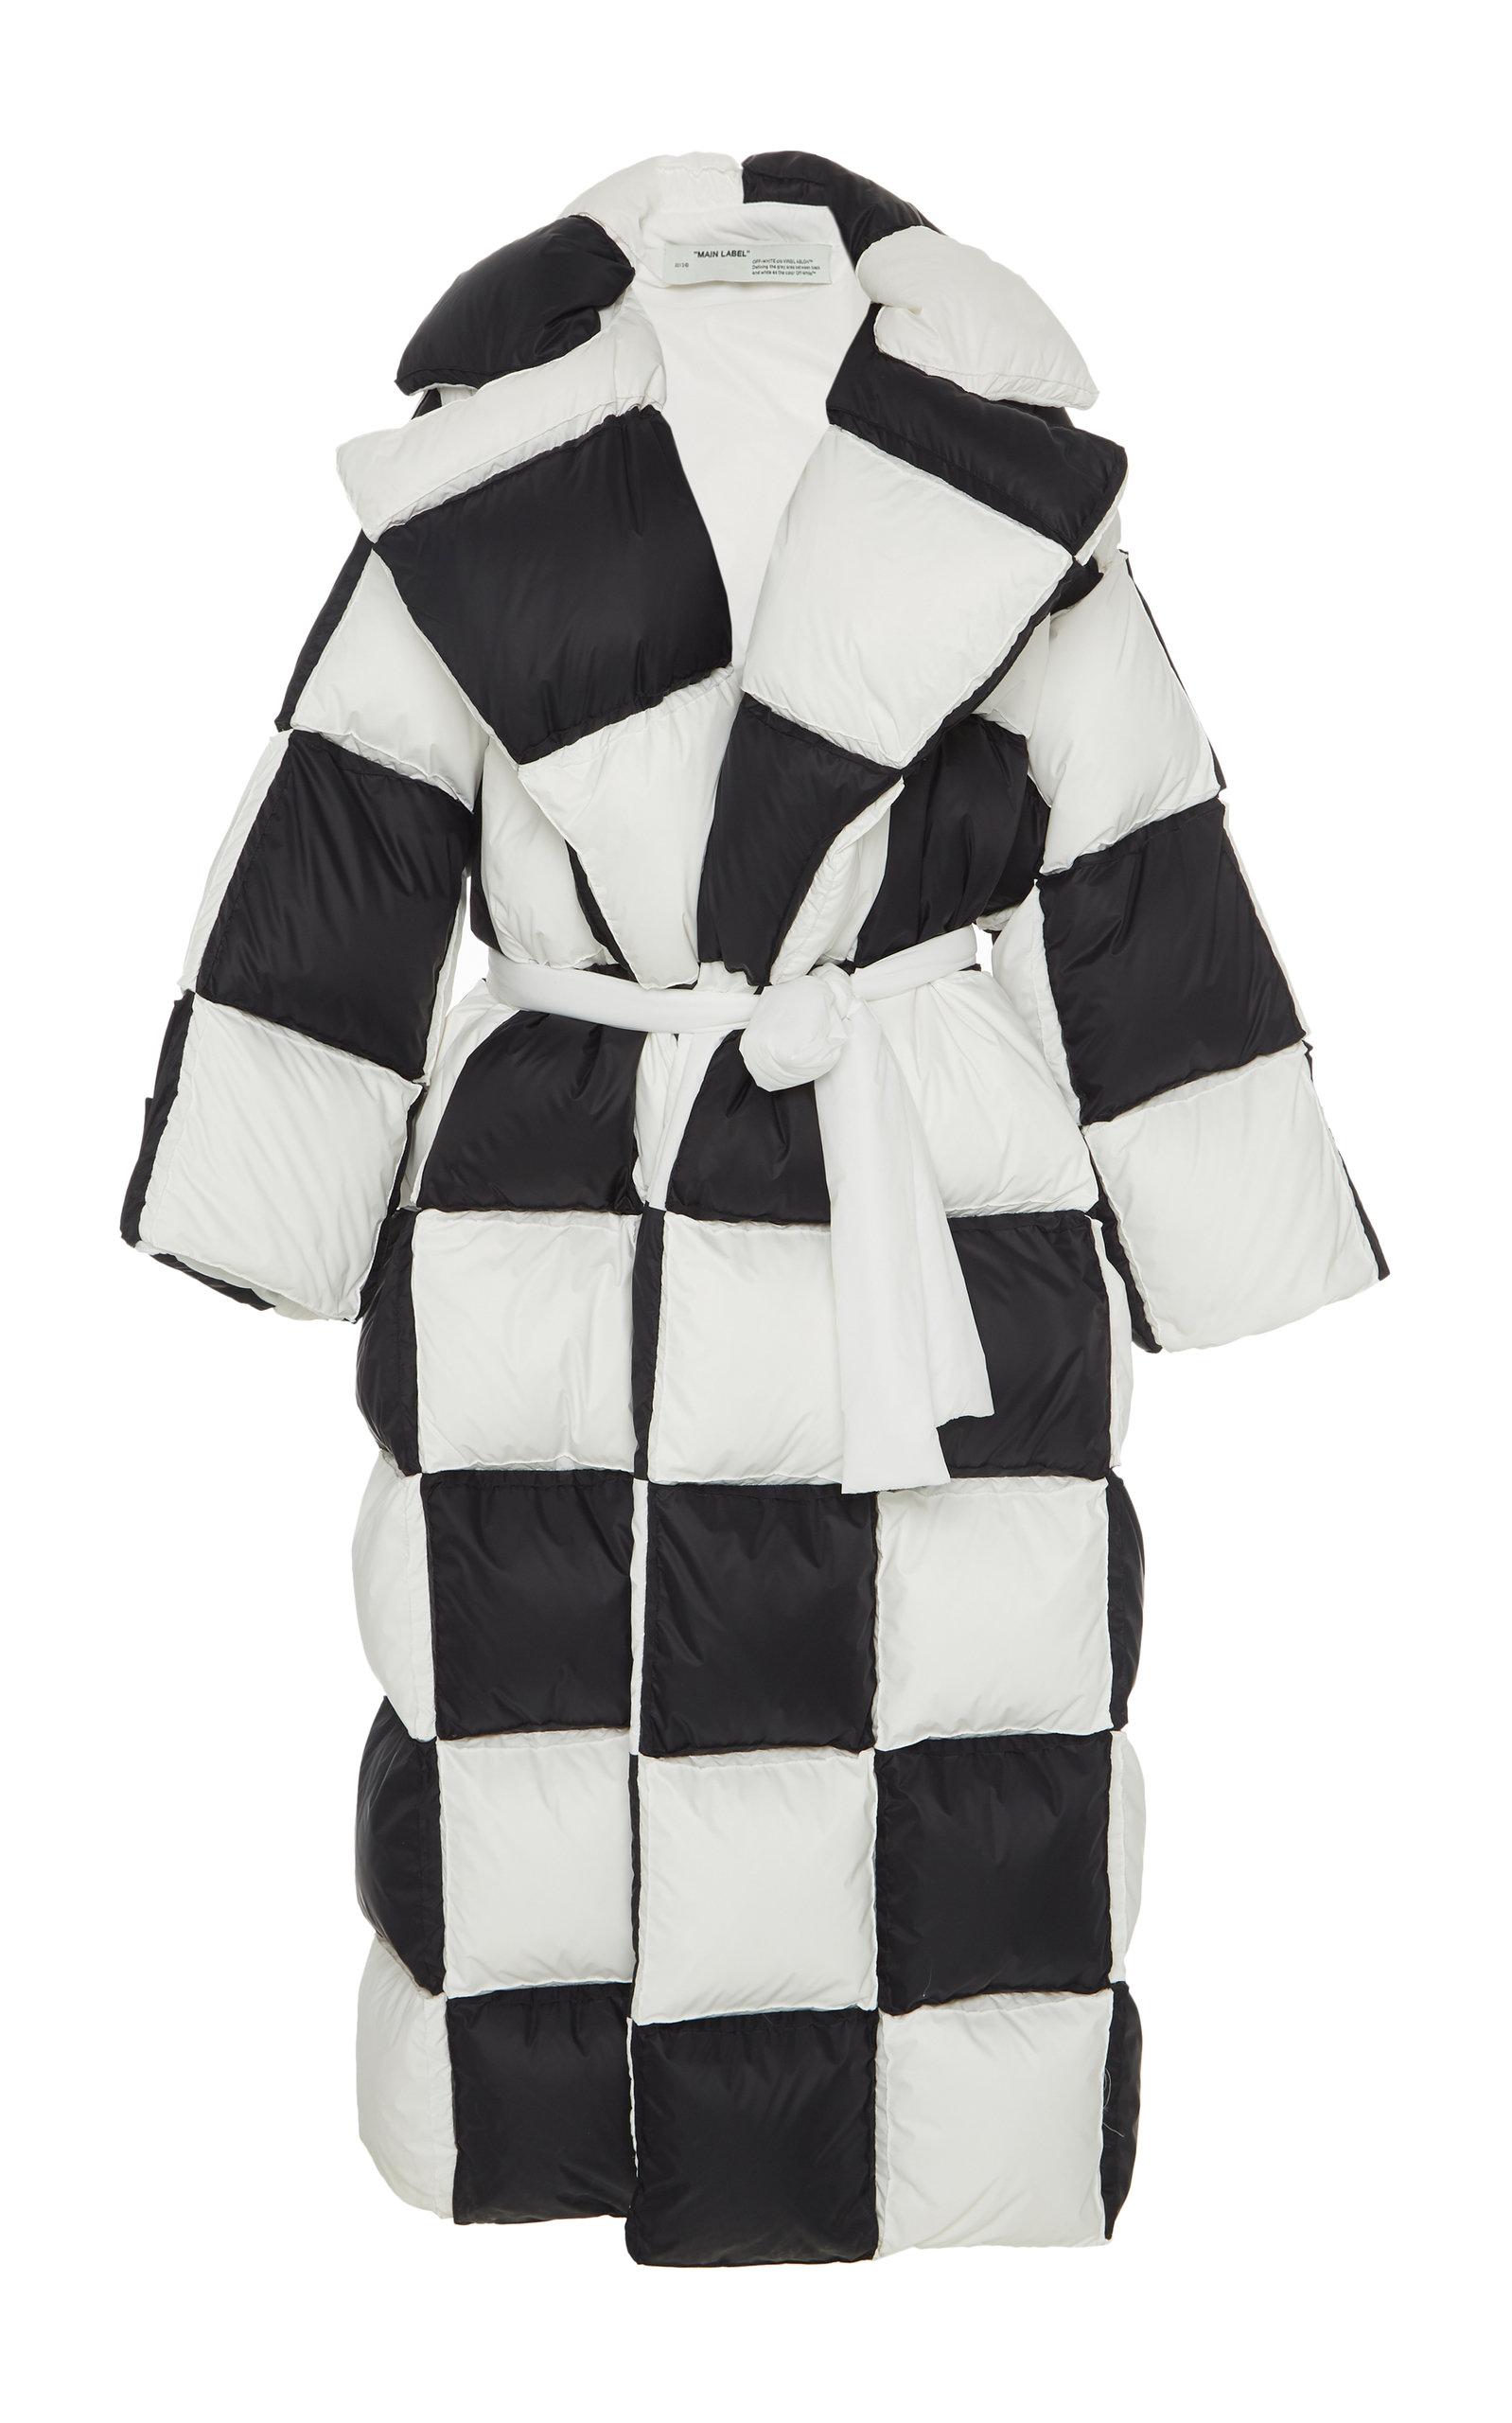 Off-White c/o Virgil Abloh Synthetic Checkered Puffer Coat in Black/White ( Black) - Lyst